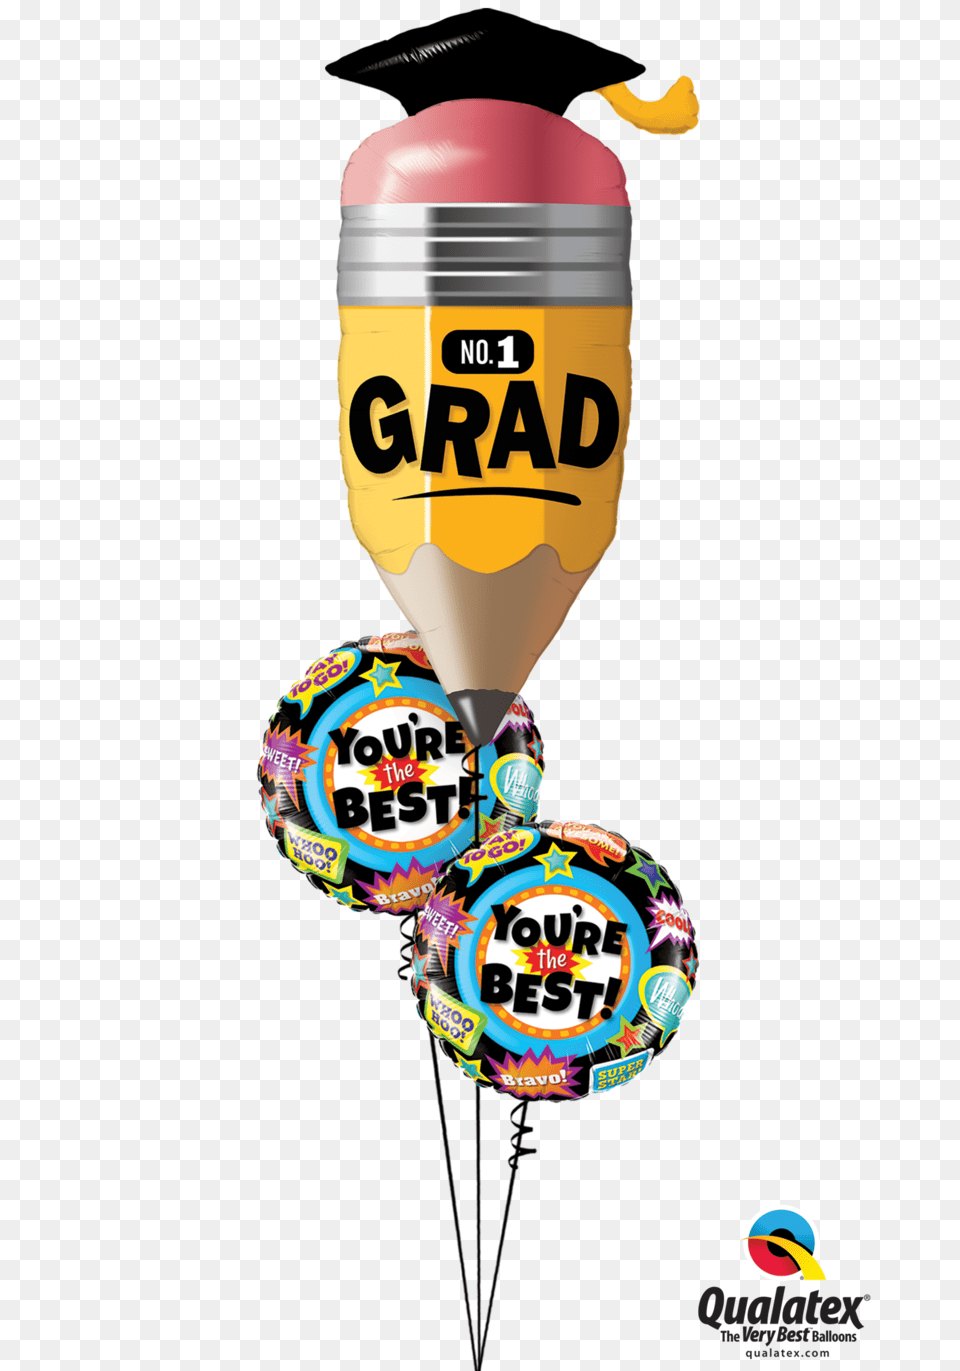 Pencils Up 41quot No 1 Grad Pencil Balloon Mylar Balloons Foil, Food, Sweets, Cream, Dessert Free Png Download